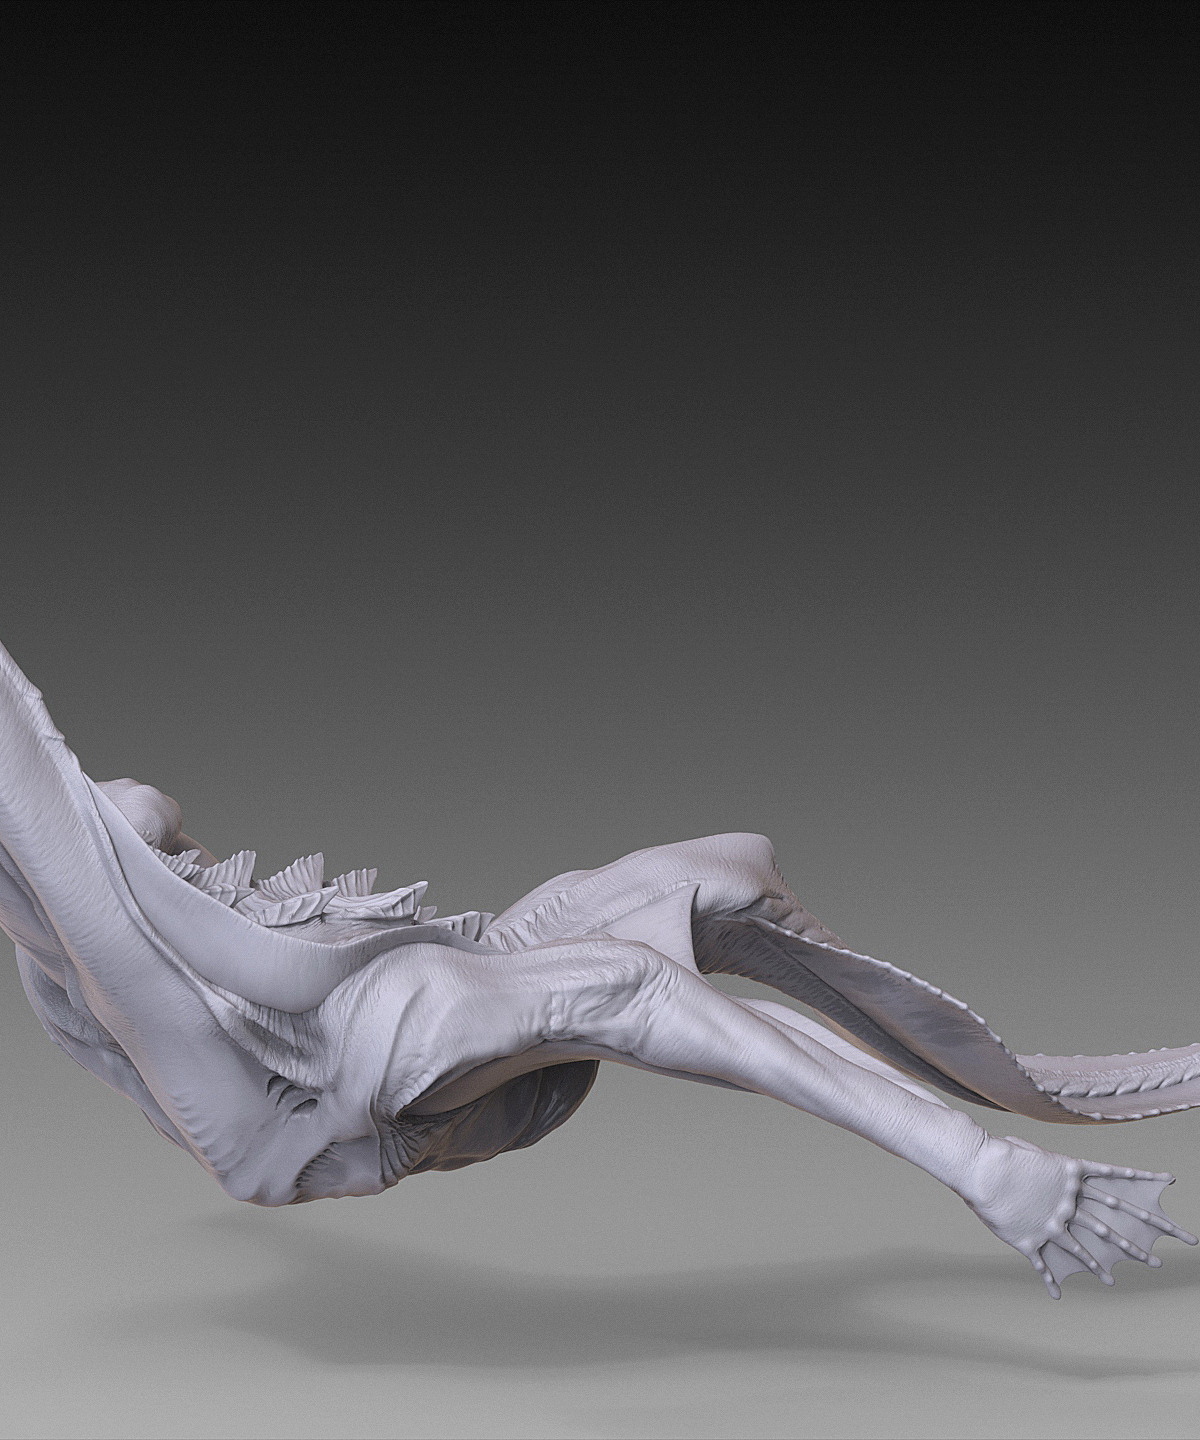 2015_04_Leviathan_DigitalSculpting_03.jpg